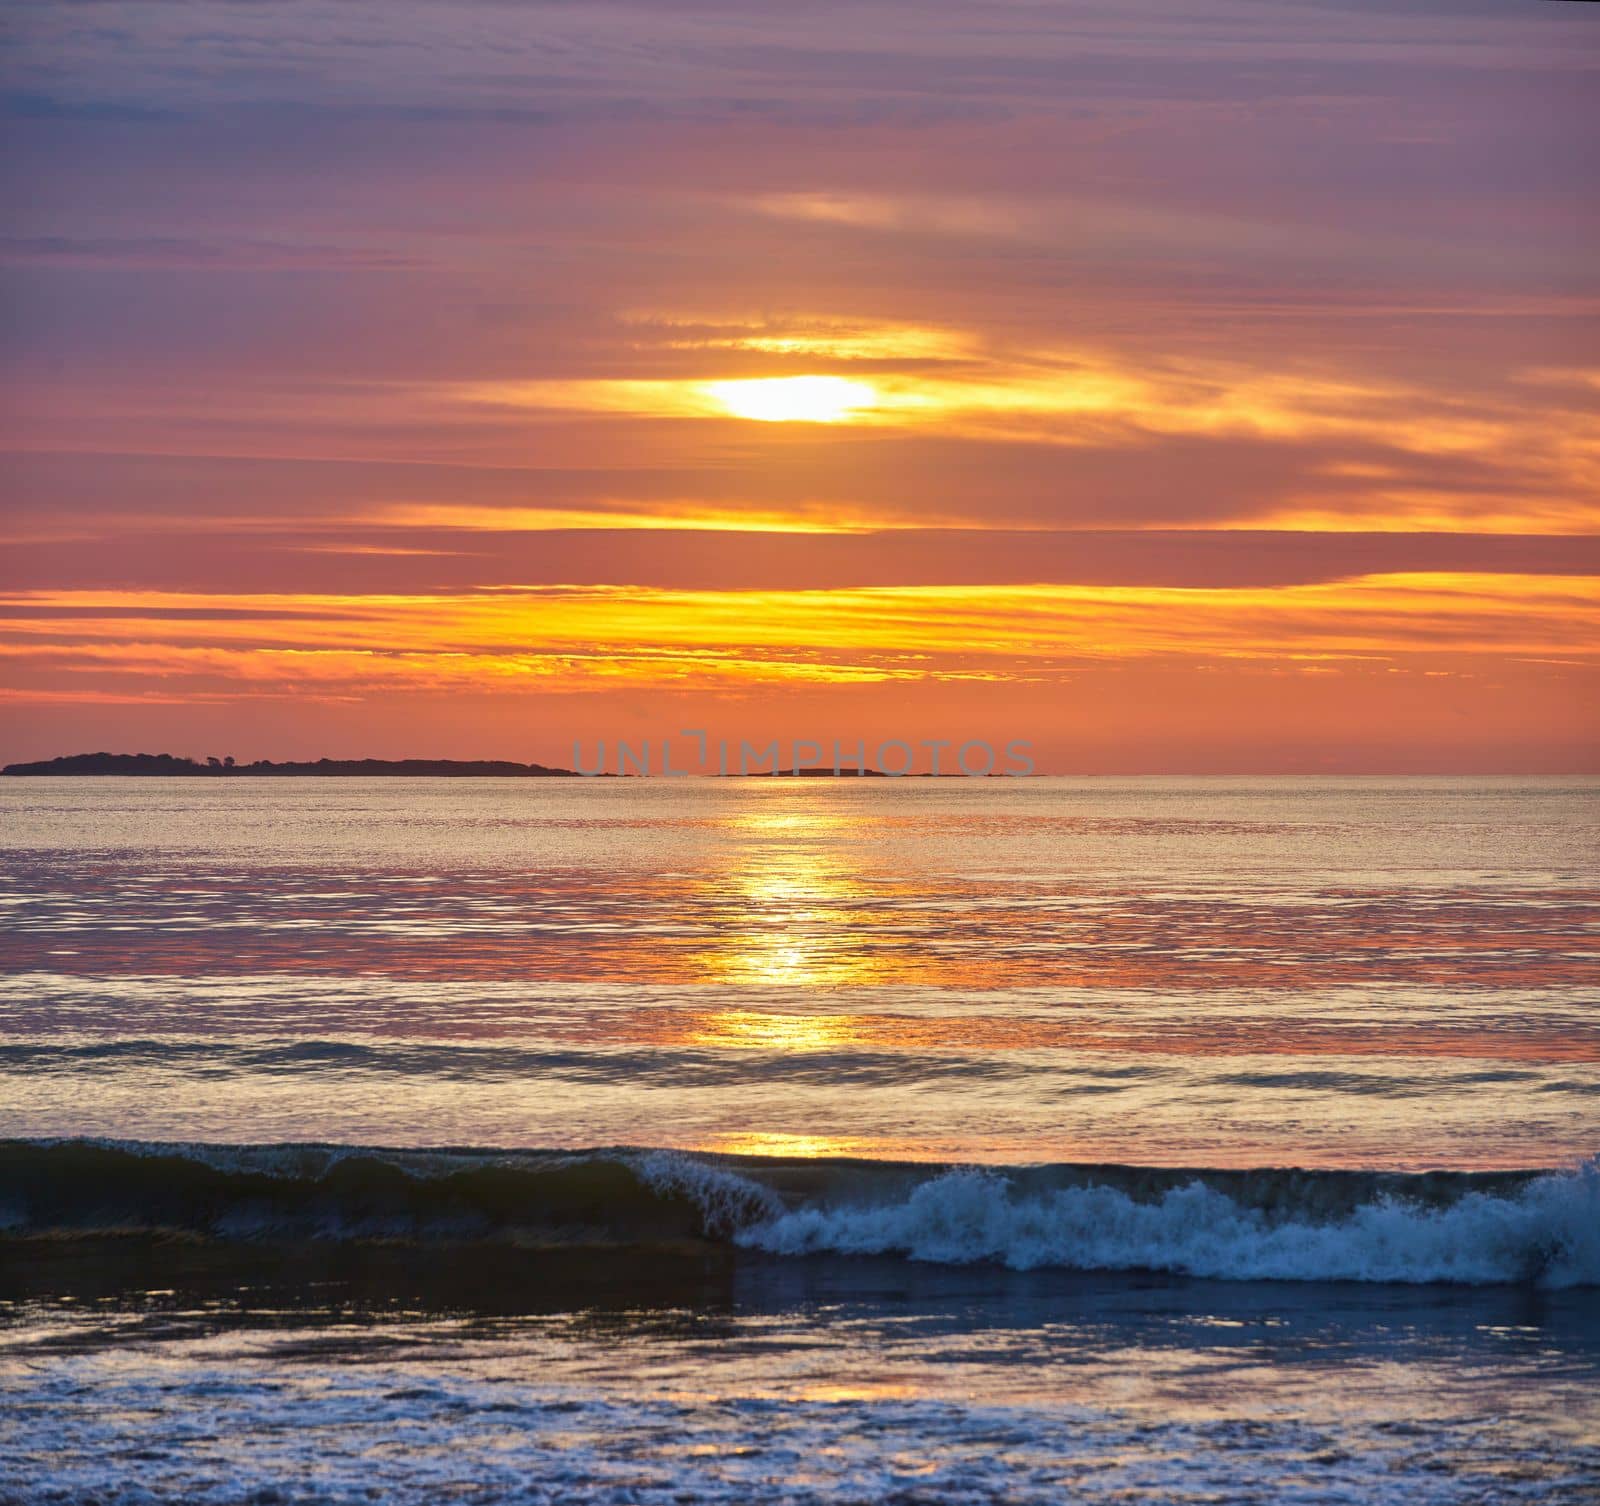 Image of Stunning sunrise over east coast ocean with crashing waves